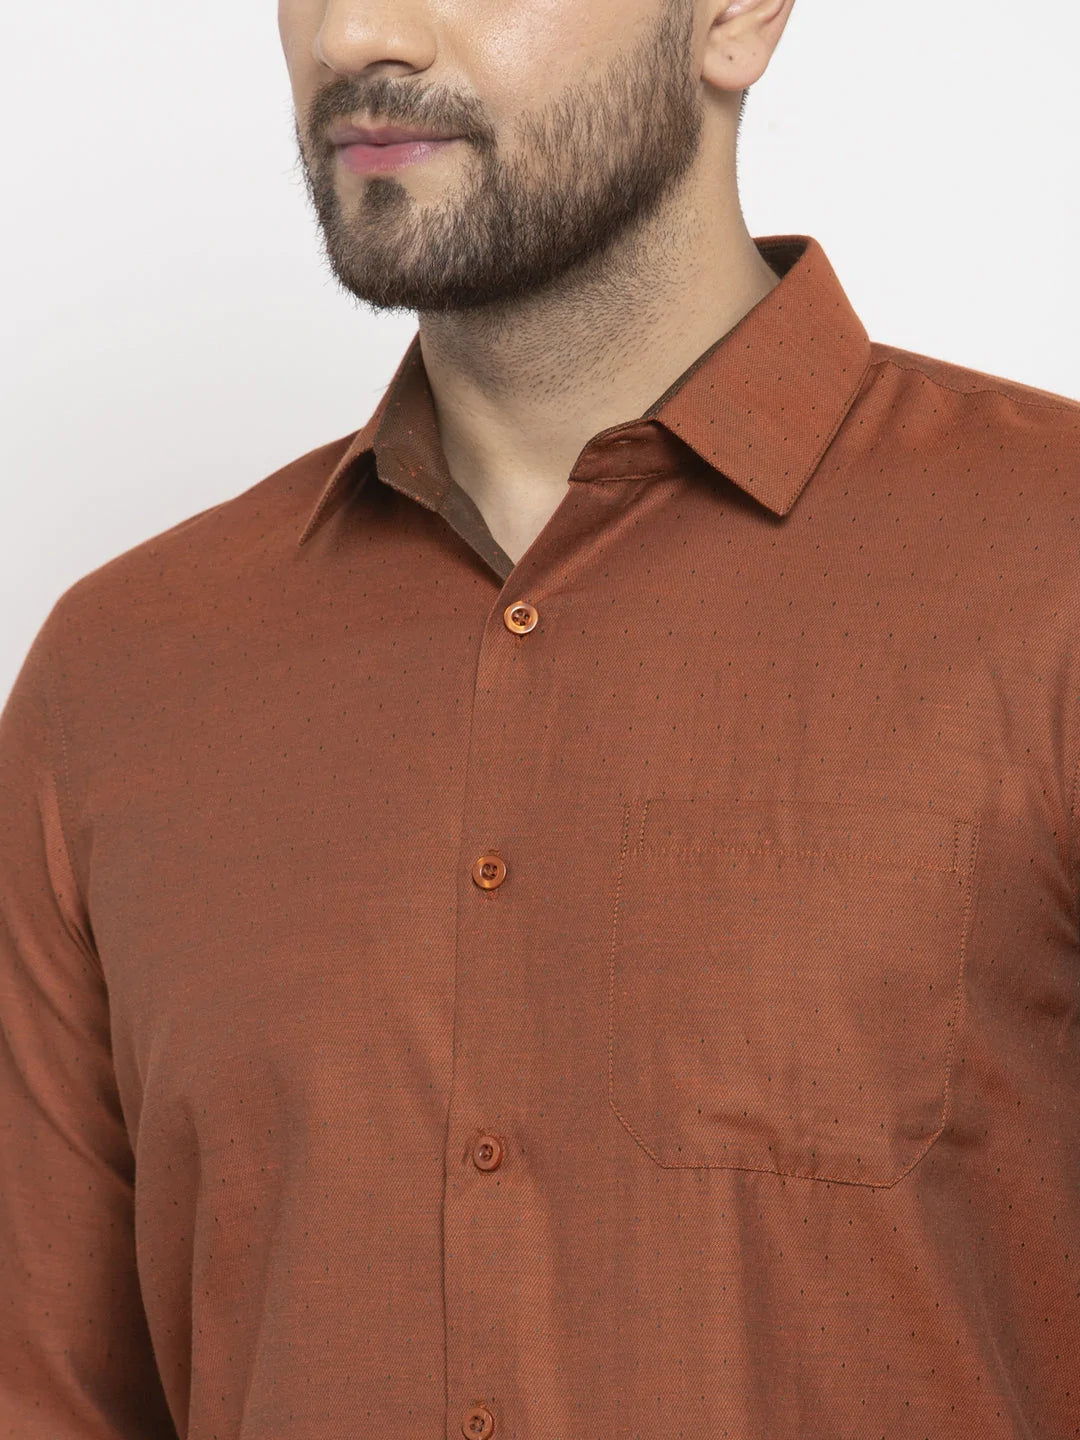 Jainish Brown Men's Cotton Polka Dots Formal Shirt's ( SF 761Brown )